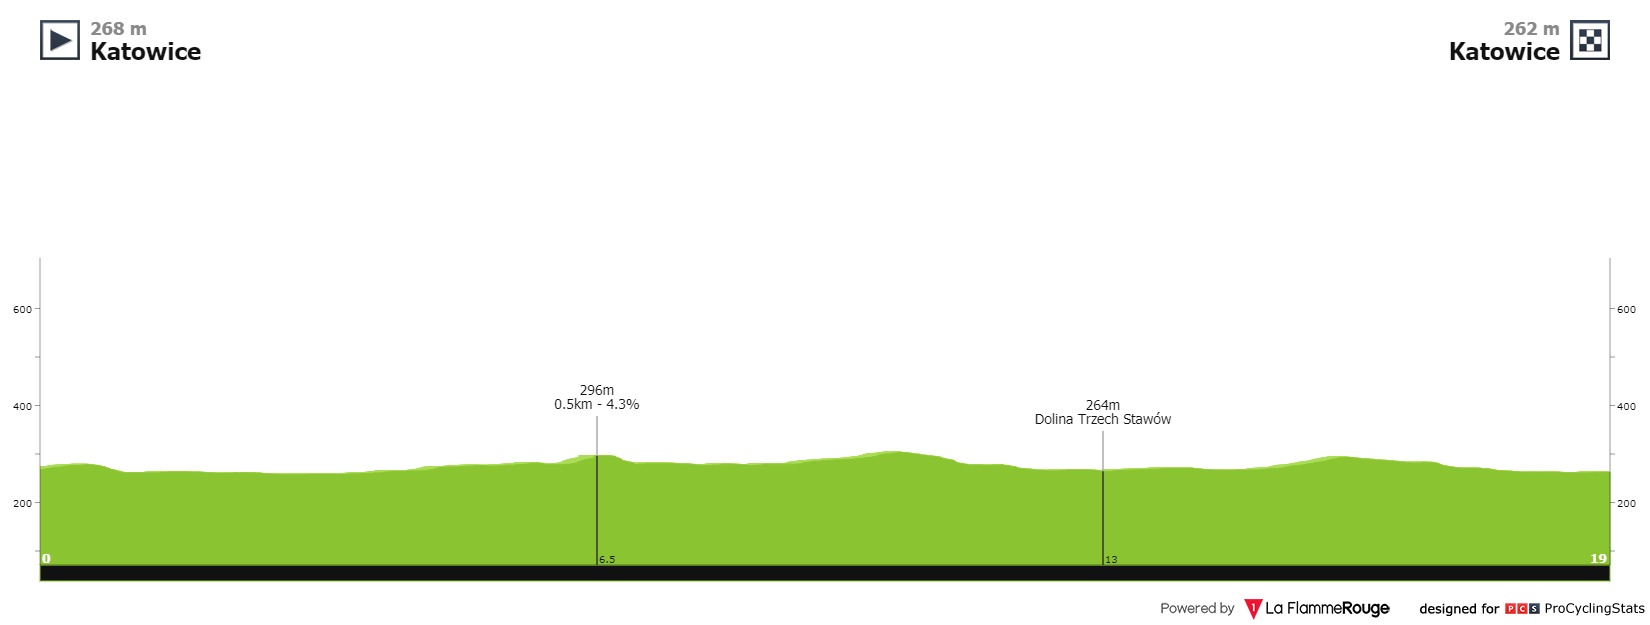 tour-de-pologne-2021-stage-6-profile-5357558fa3.jpg